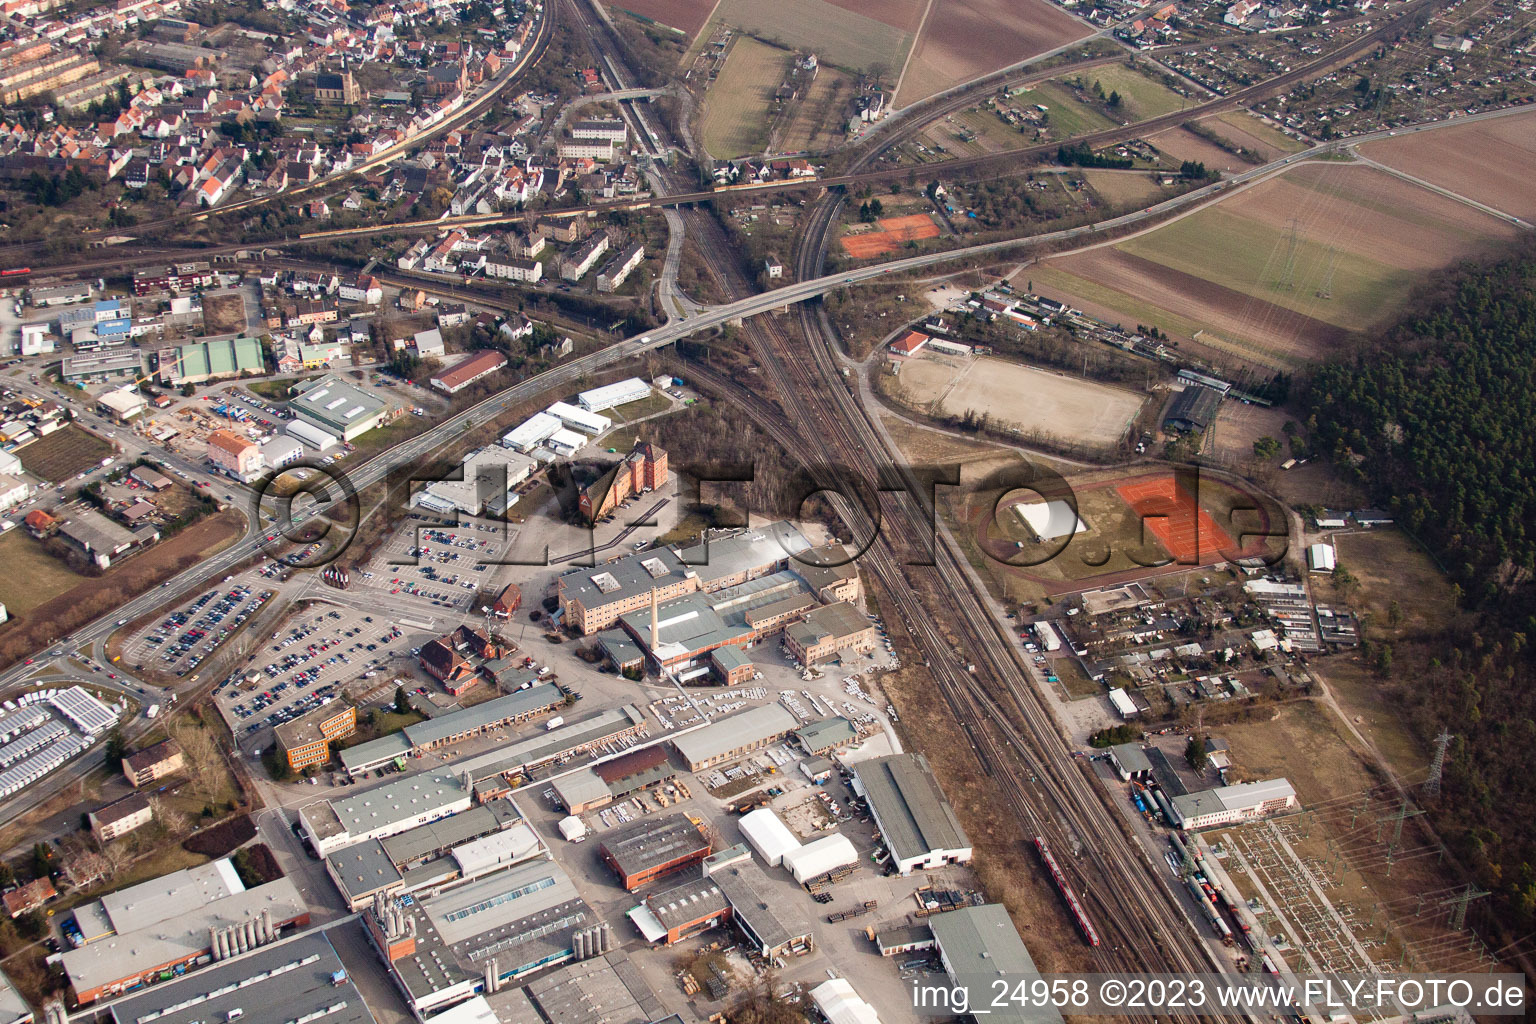 Aerial view of Friedrichsfeld in the district Rheinau in Mannheim in the state Baden-Wuerttemberg, Germany